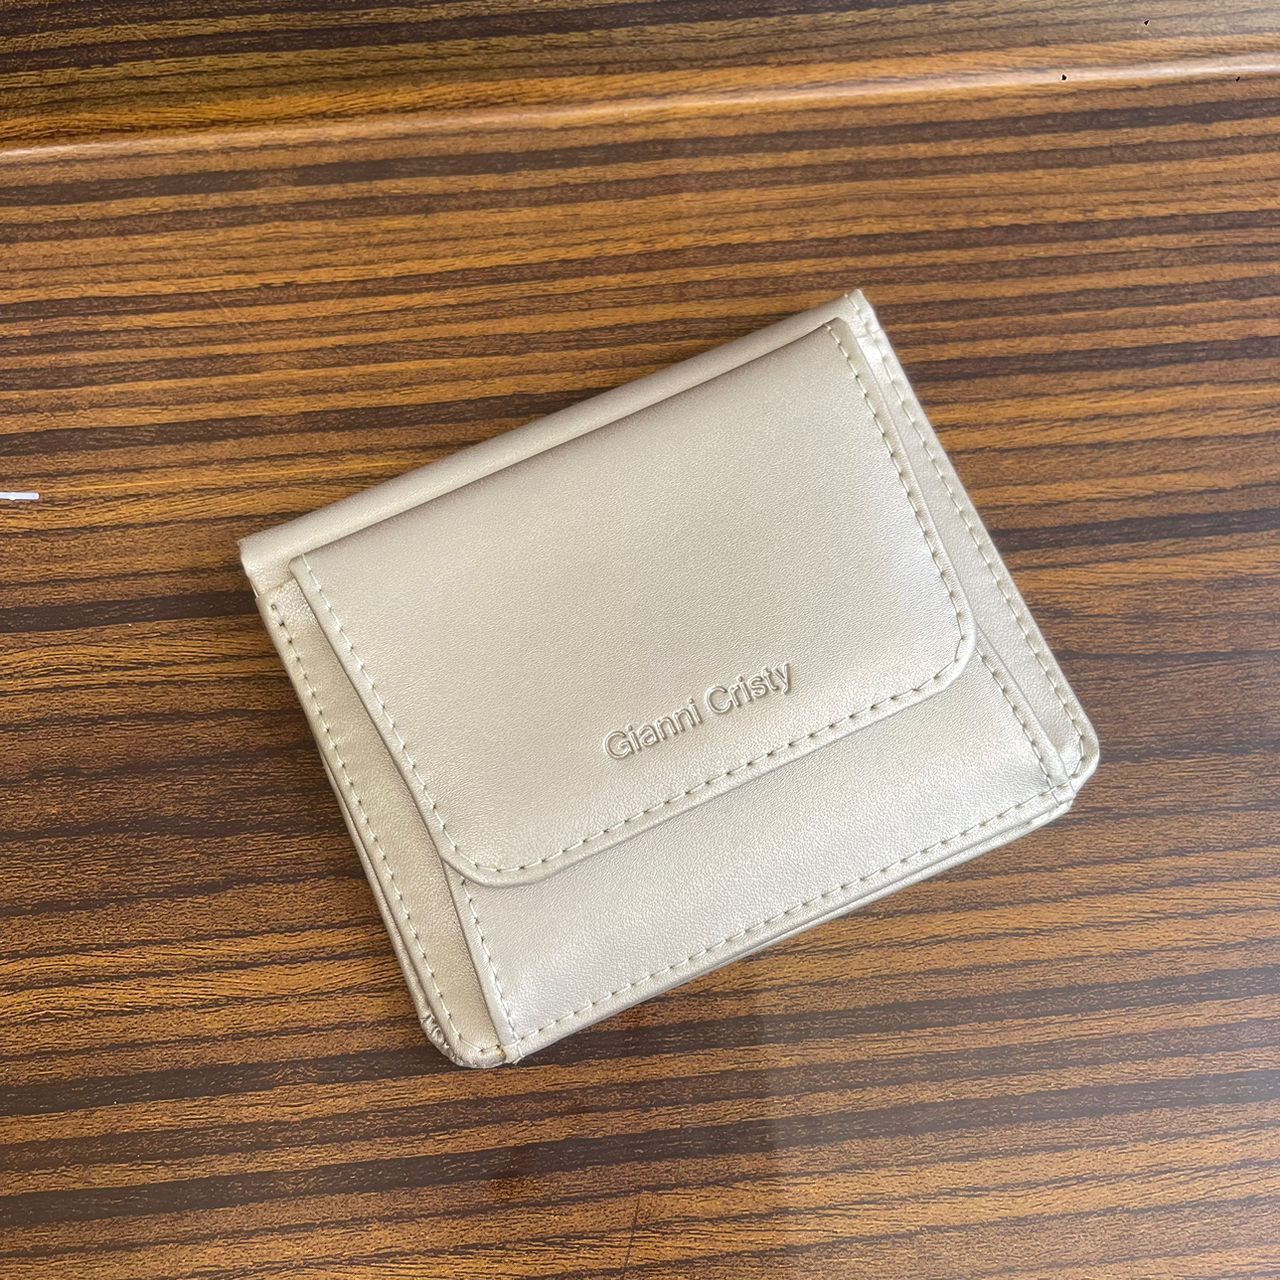 Vintage Gianni Cristy Wallet - 1